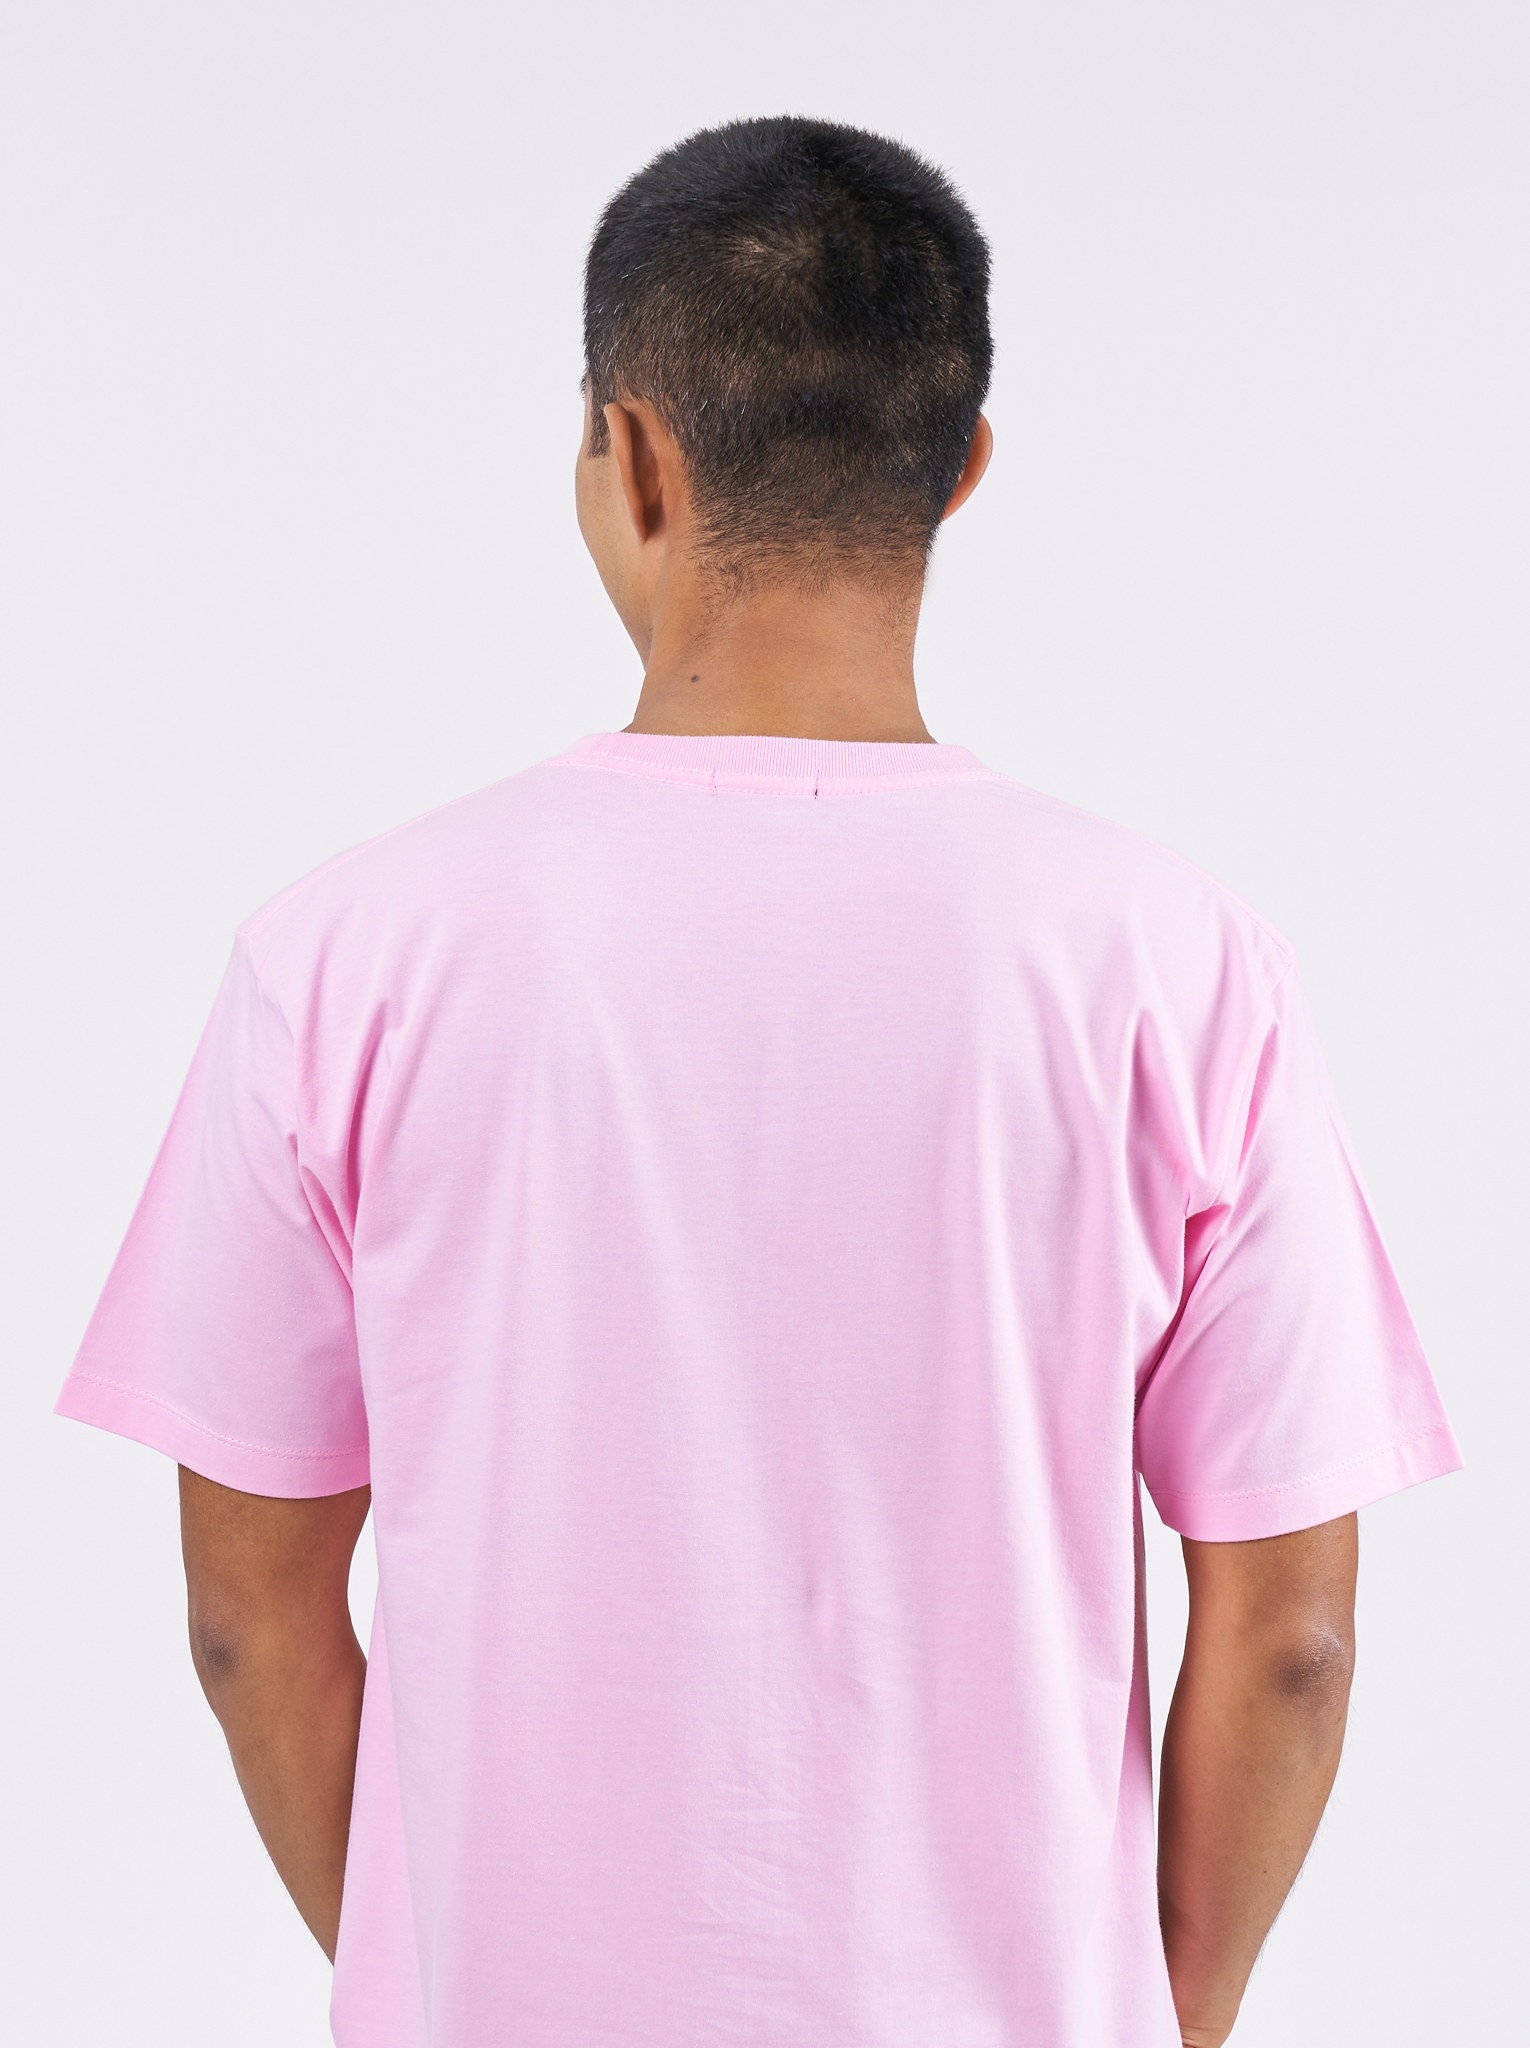 T-Shirt เสื้อยืด (Light Pink, สีชมพูอ่อน)(Unisex)